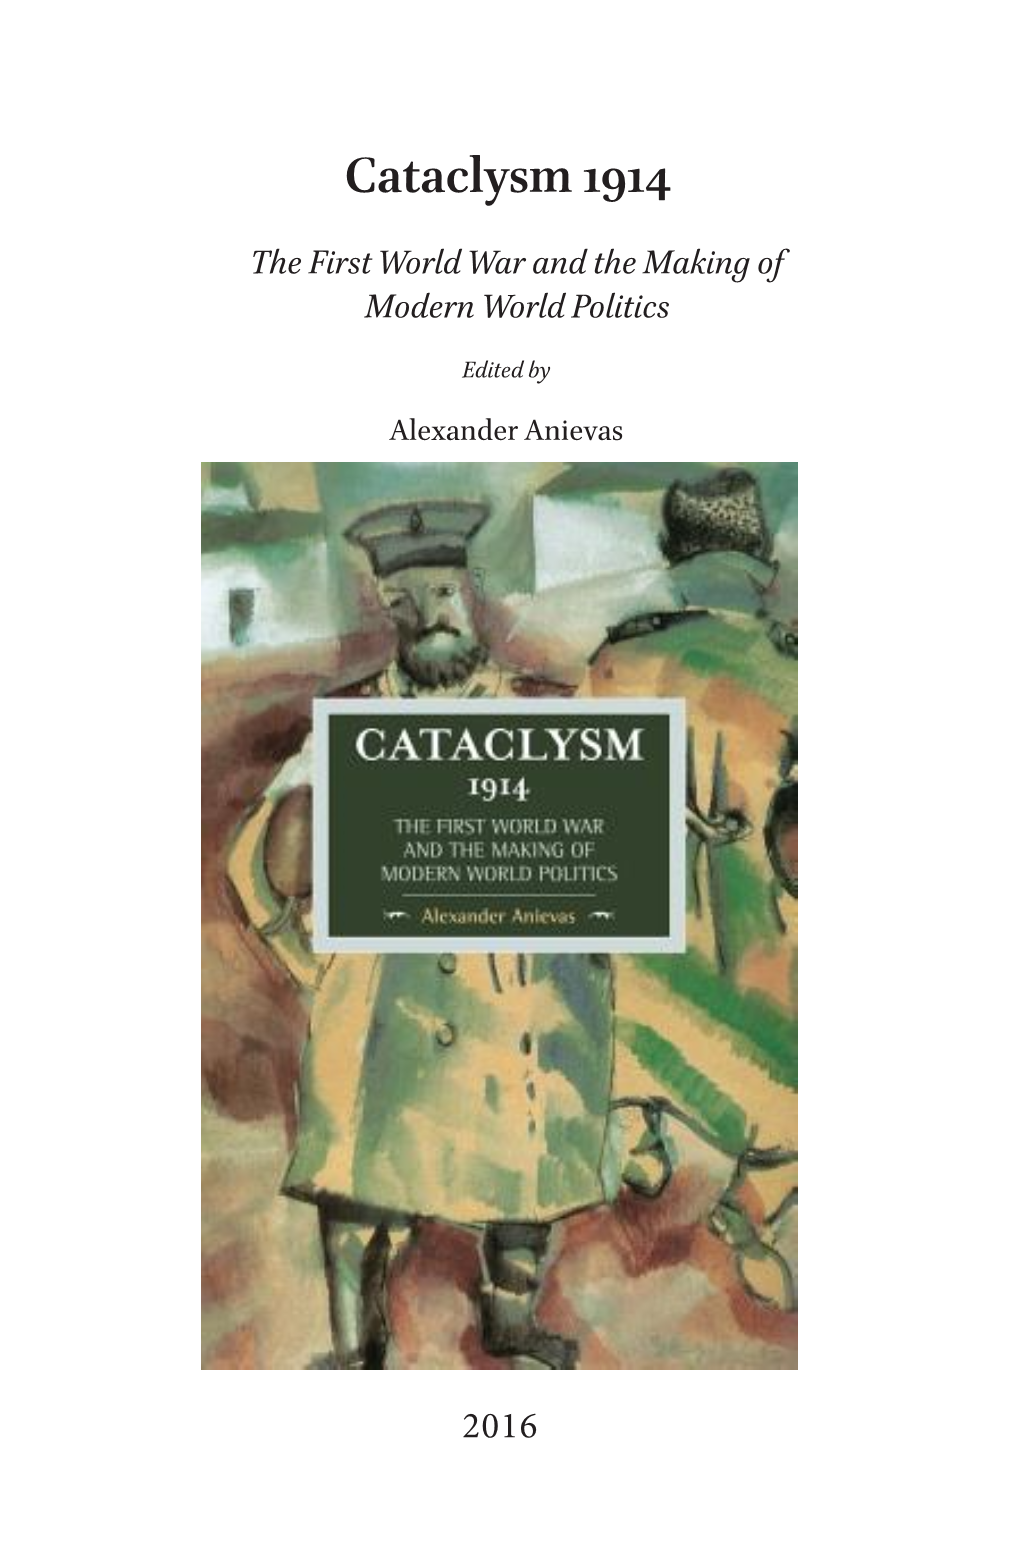 Cataclysm 1914 the First World War and the Making of Modern World Politics